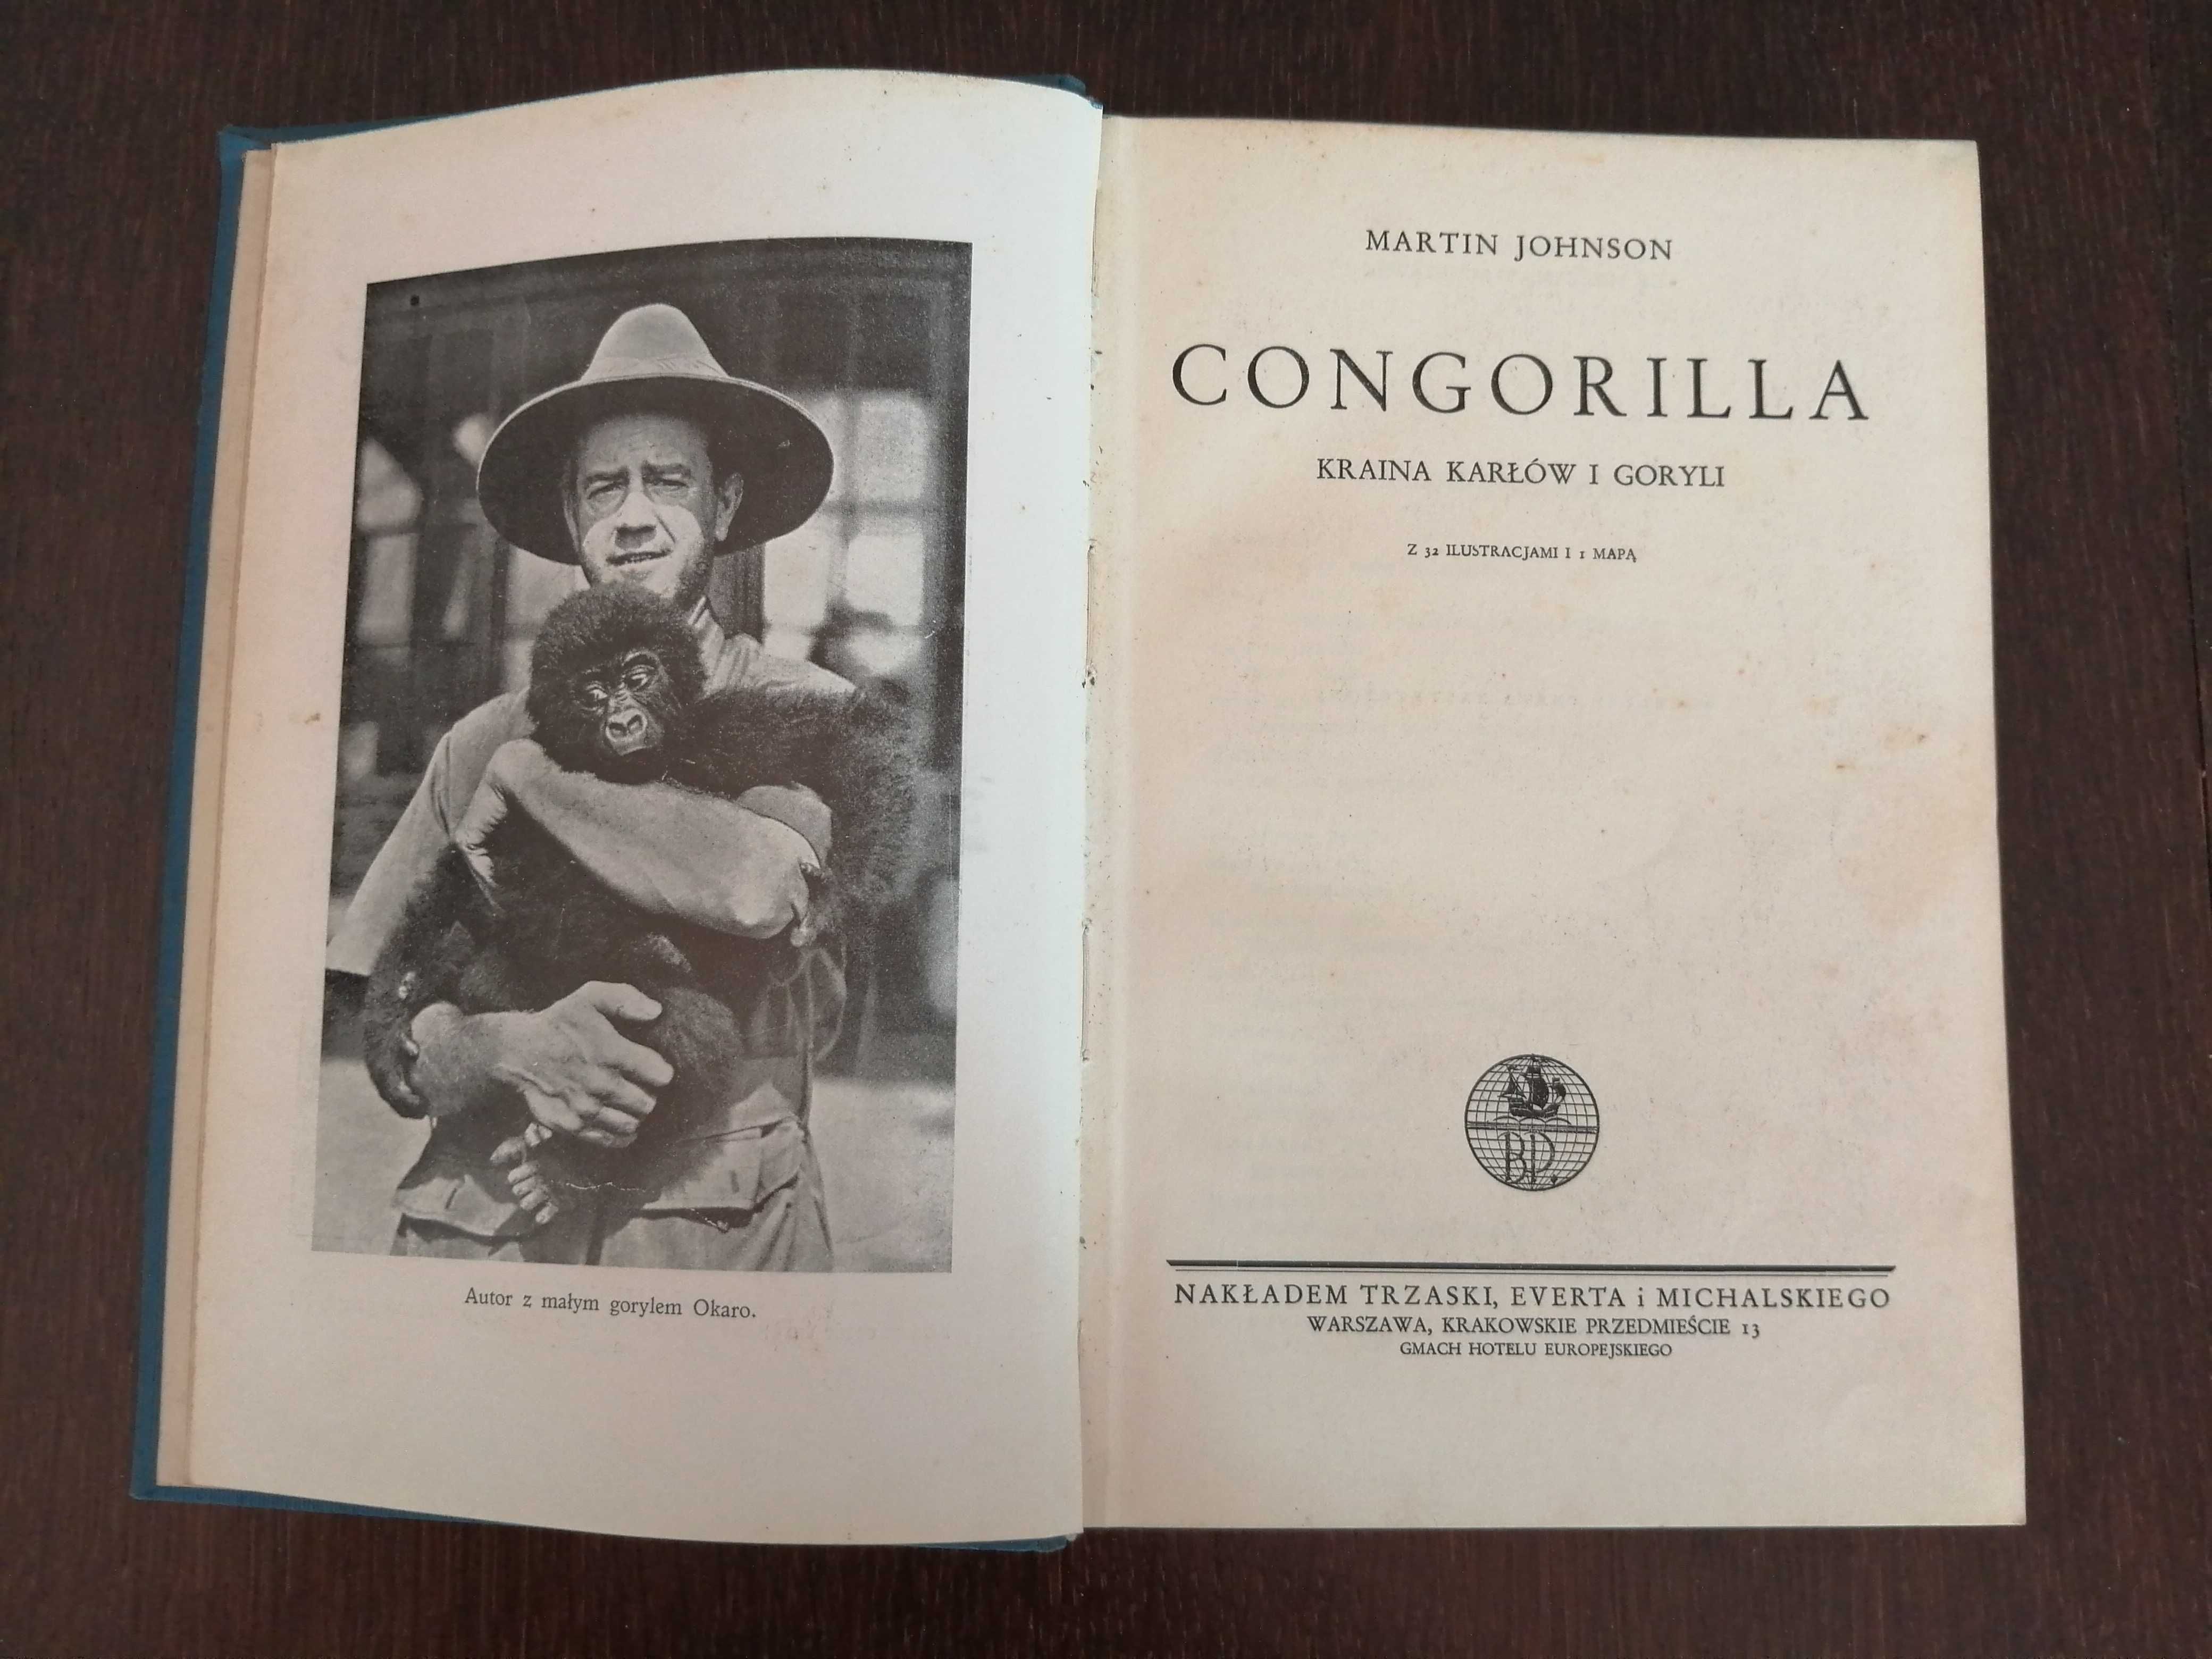 M. Johnson, Congorilla, 1938